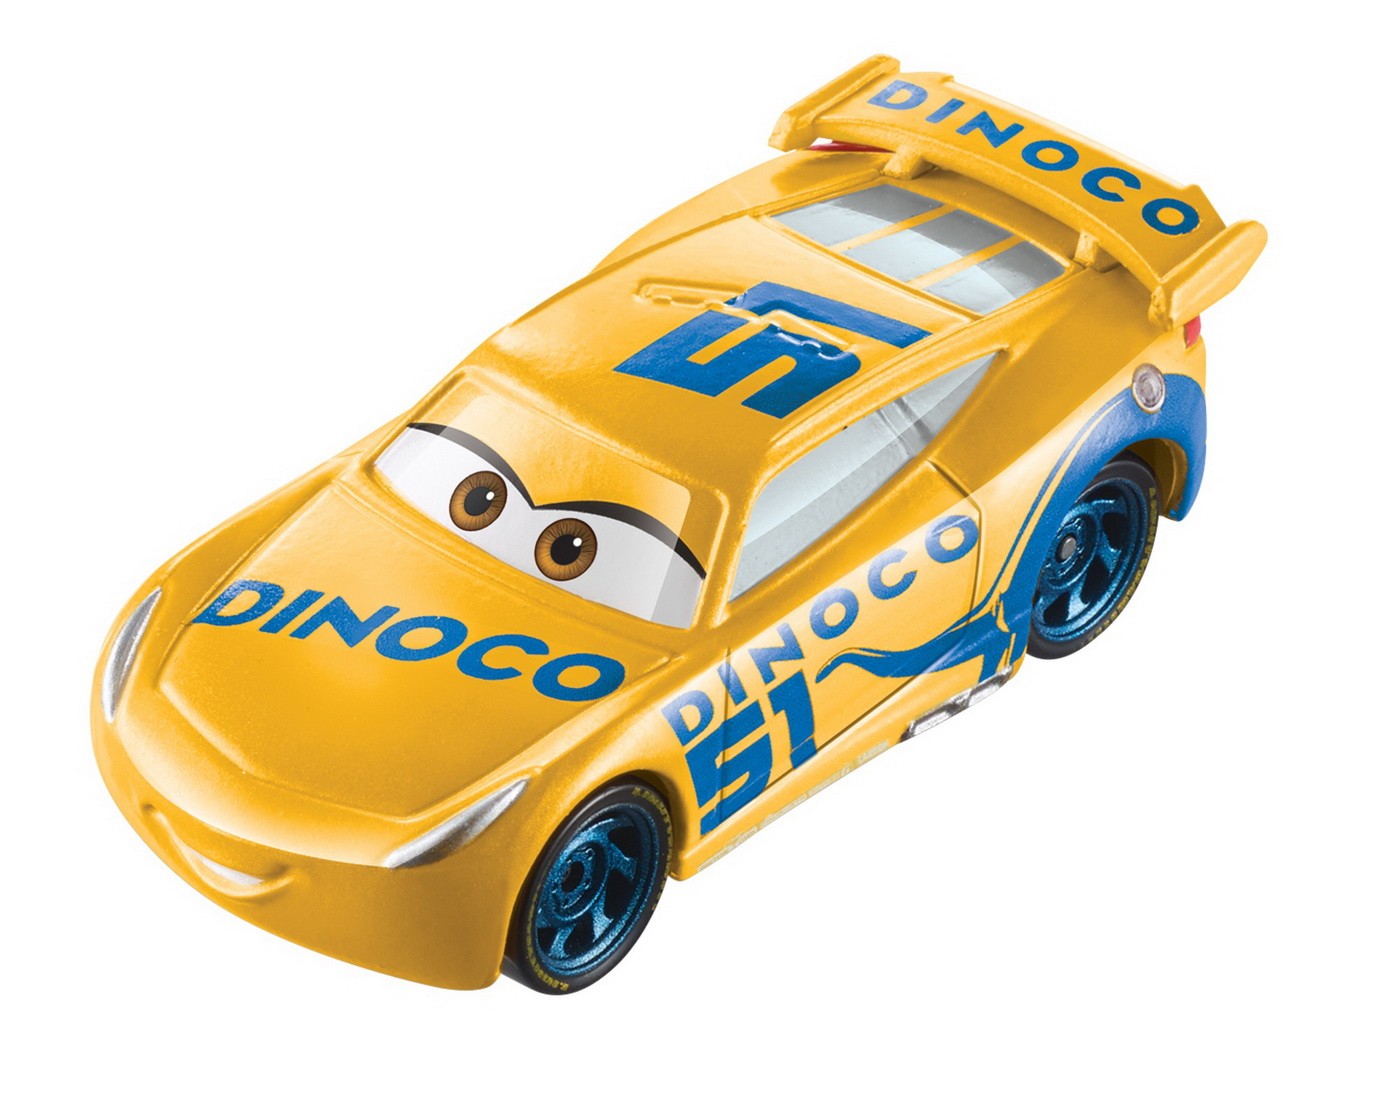 Masinuta Disney Cars - Color Changers, Dinoco Cruz Ramirez, 1:55